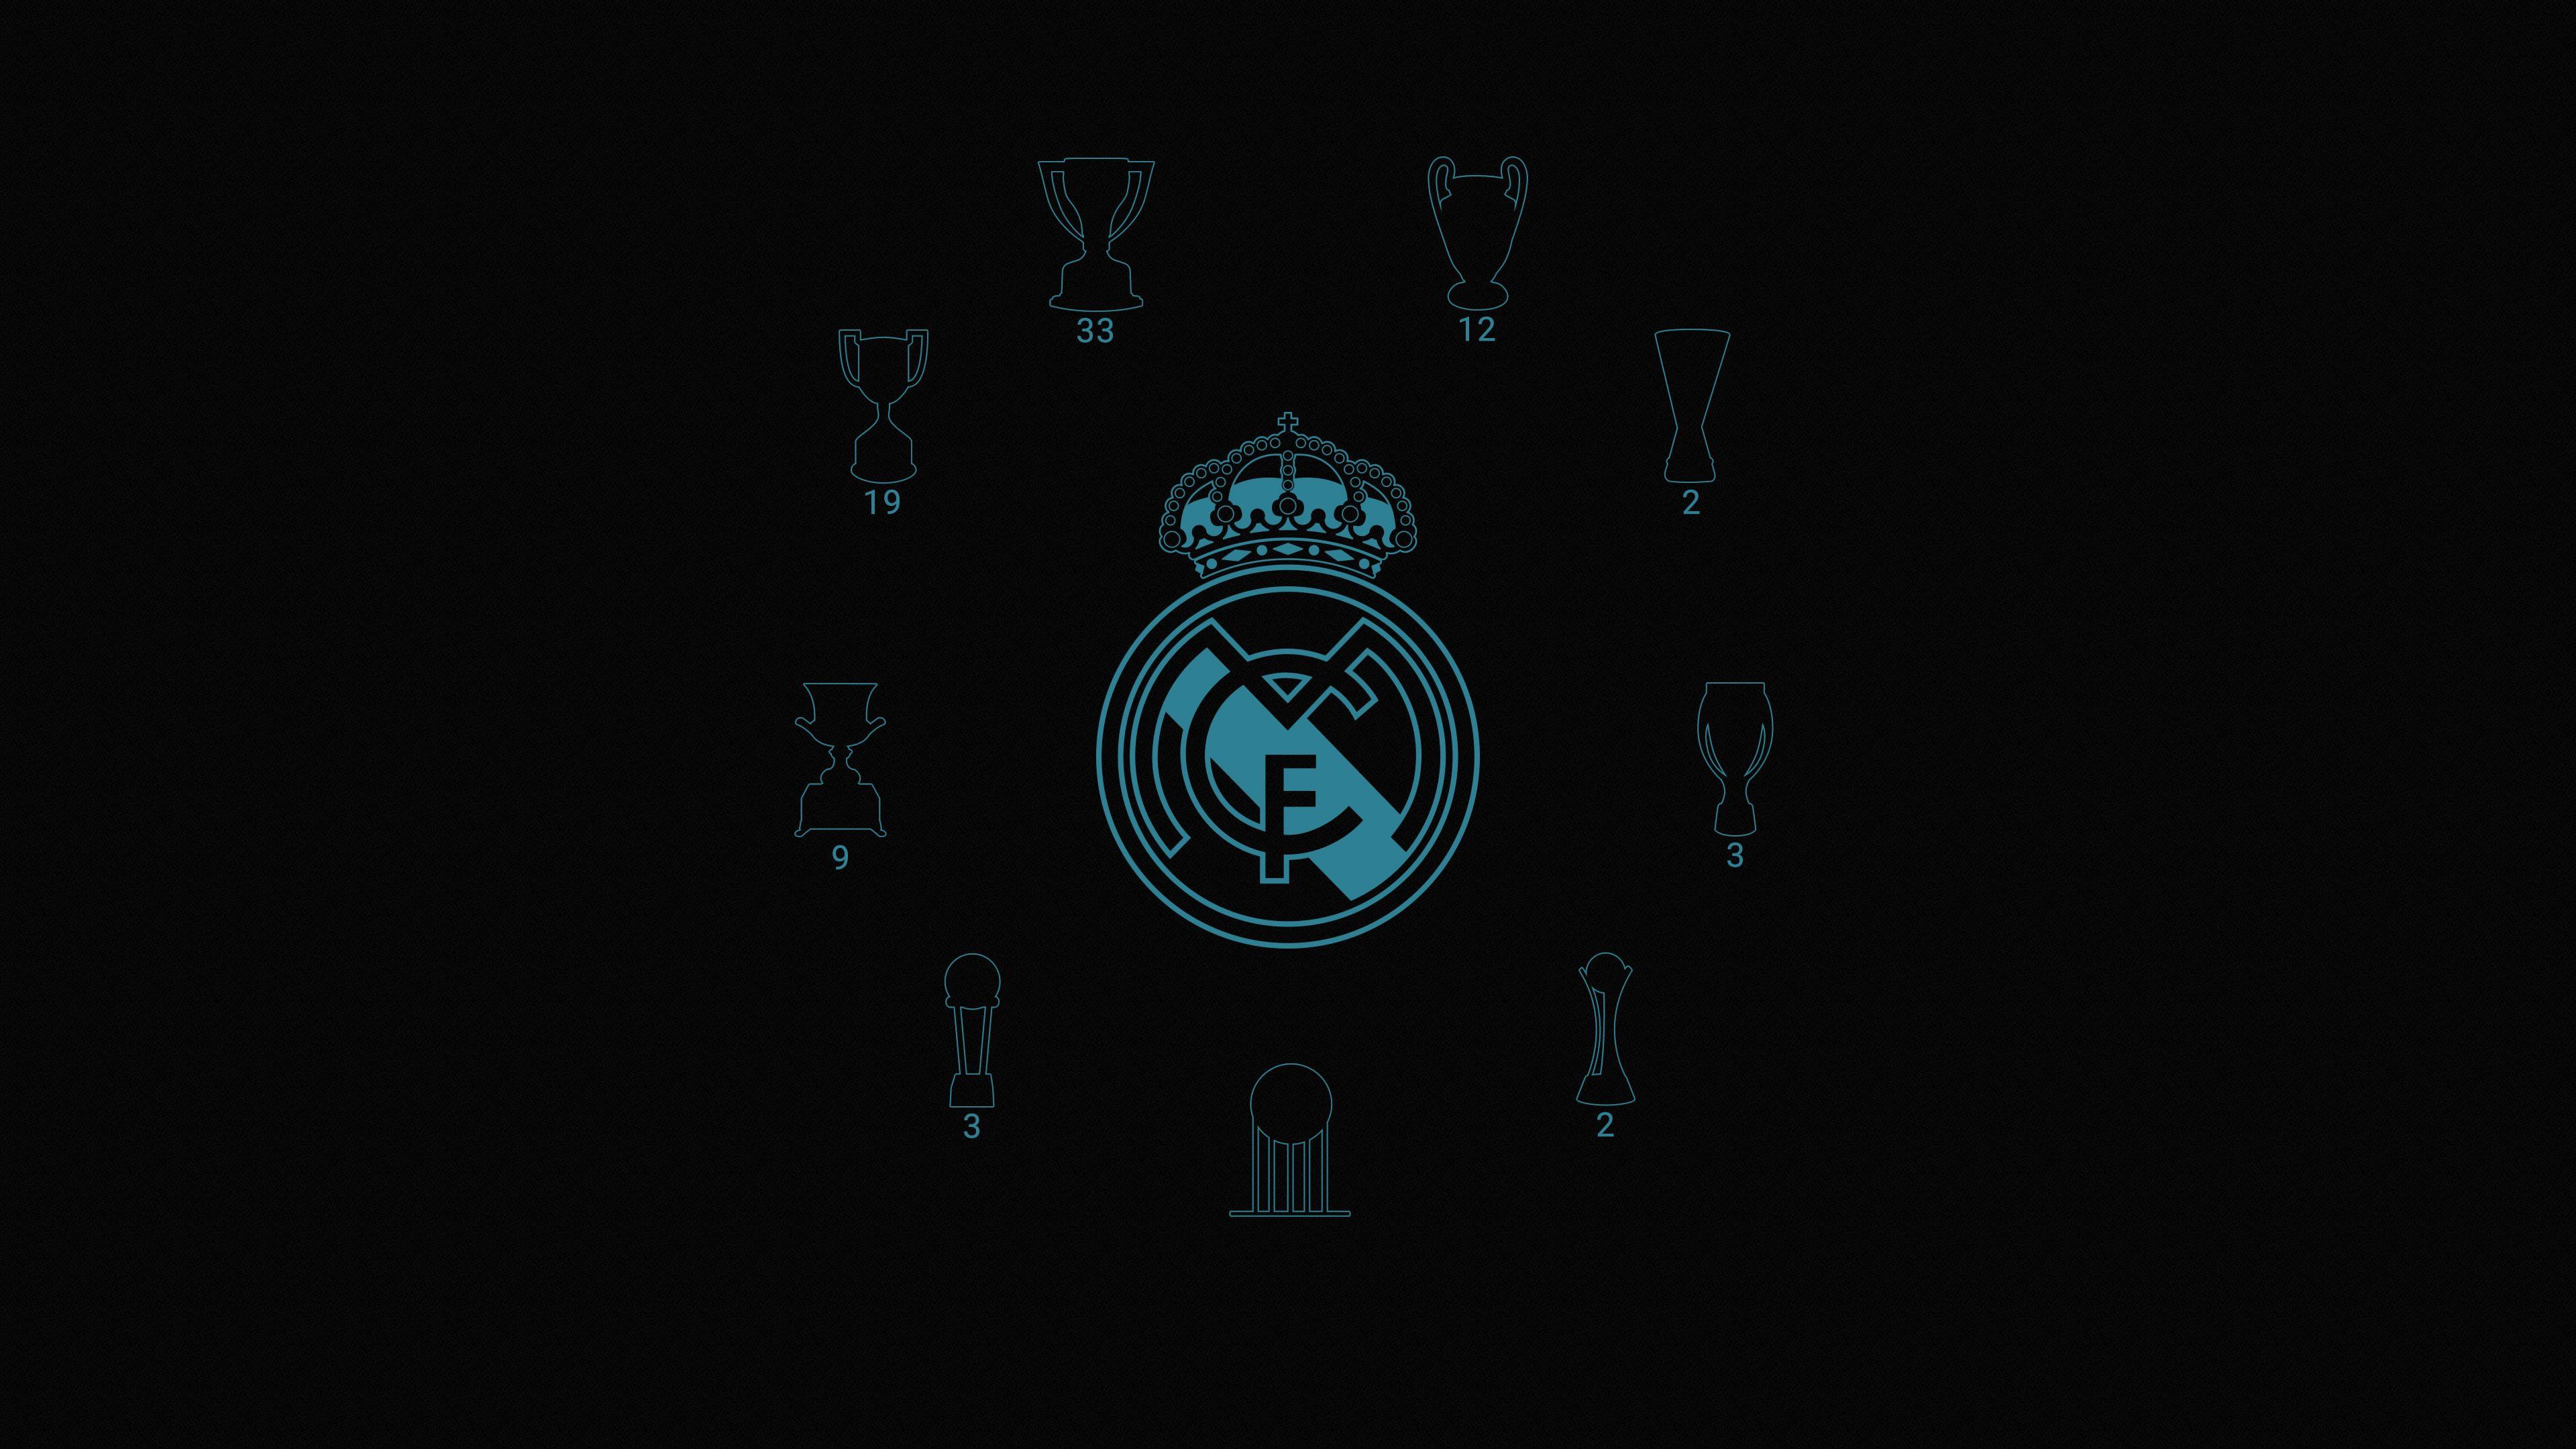 Real Madrid Wallpaper 2018